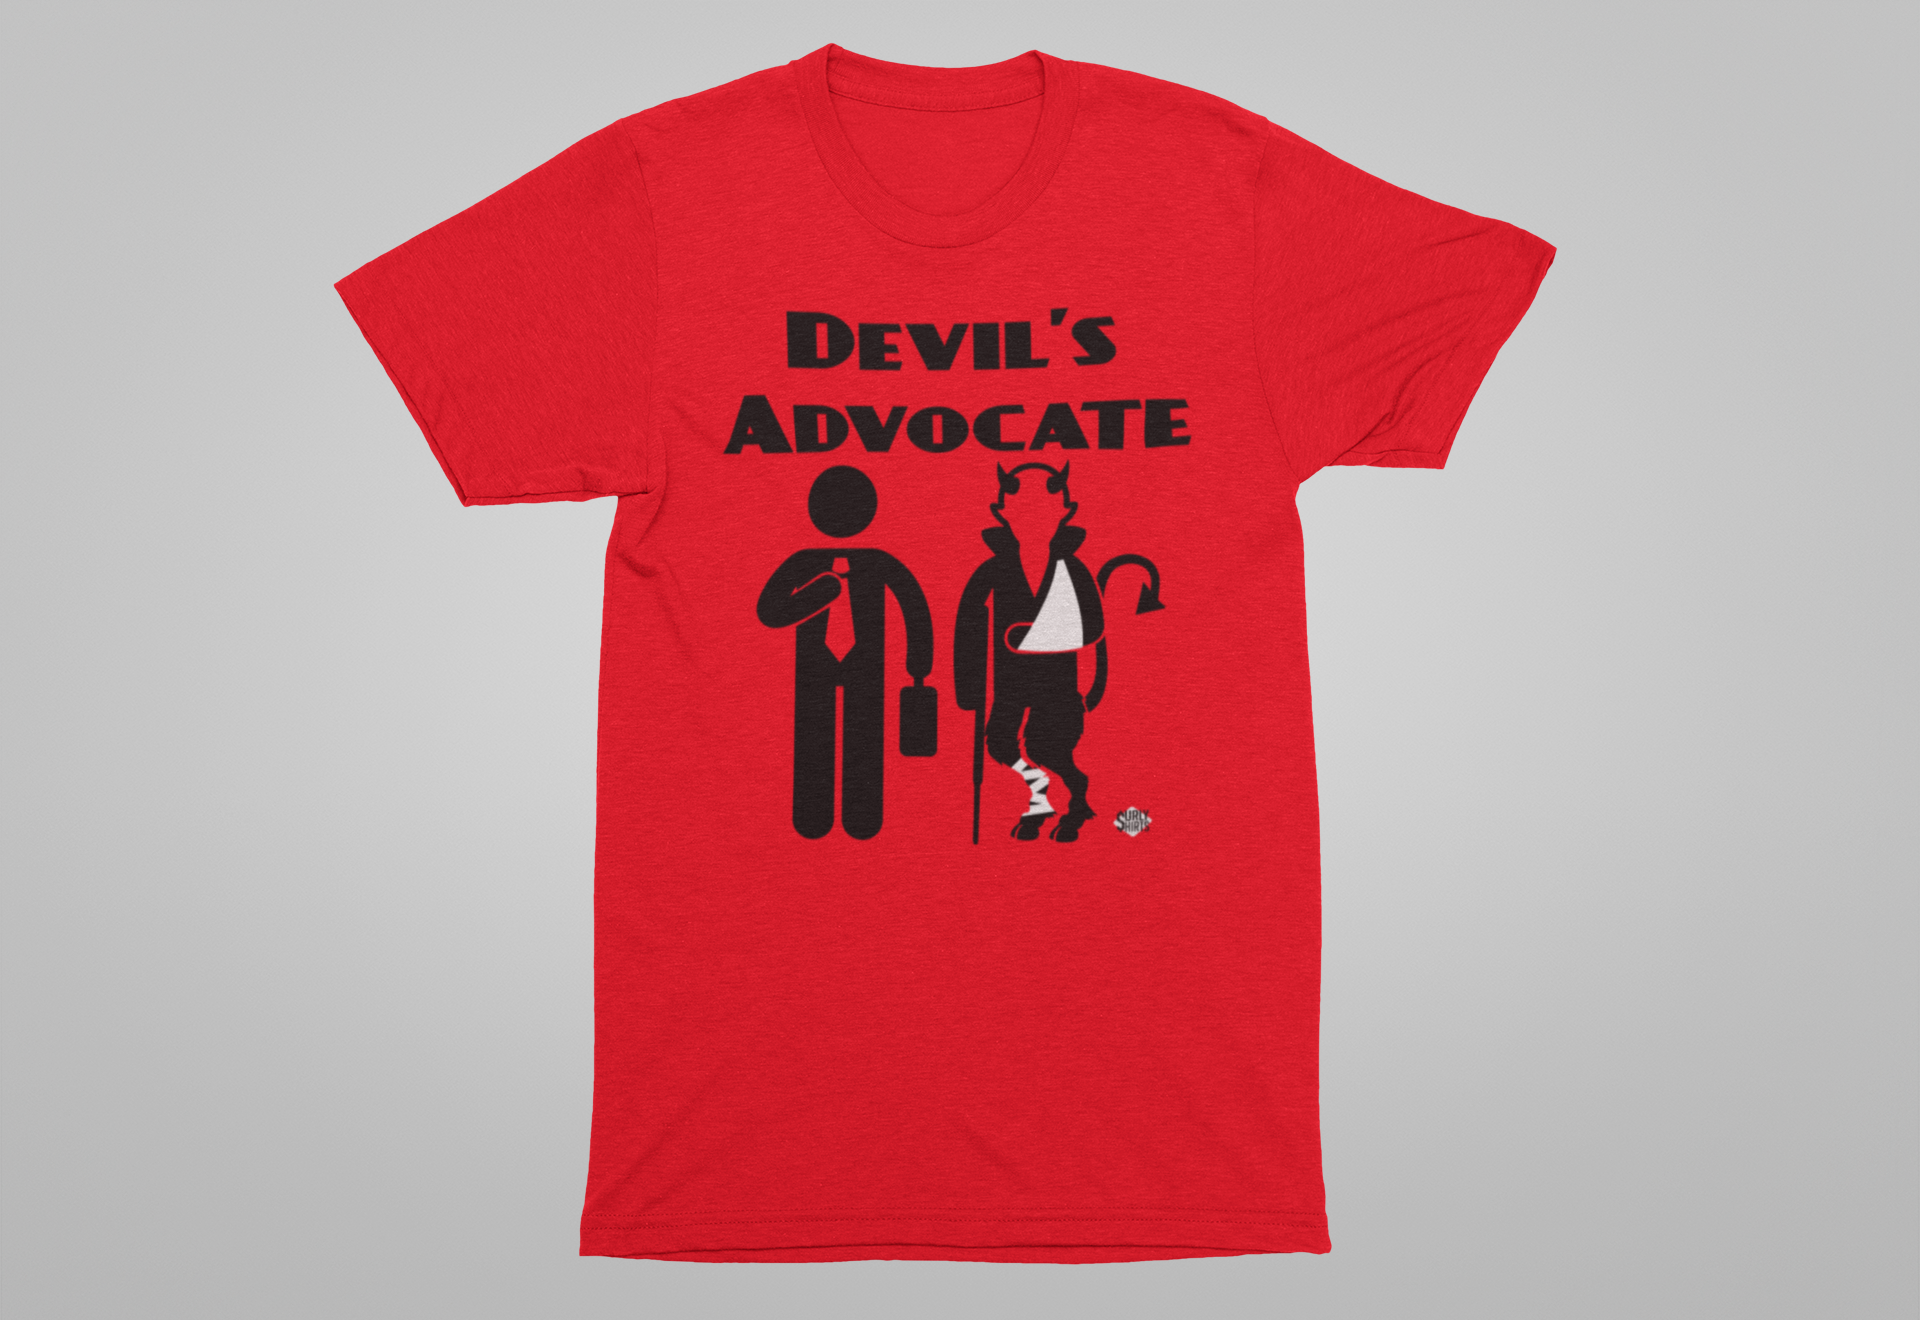 Devil's Advocate Tee